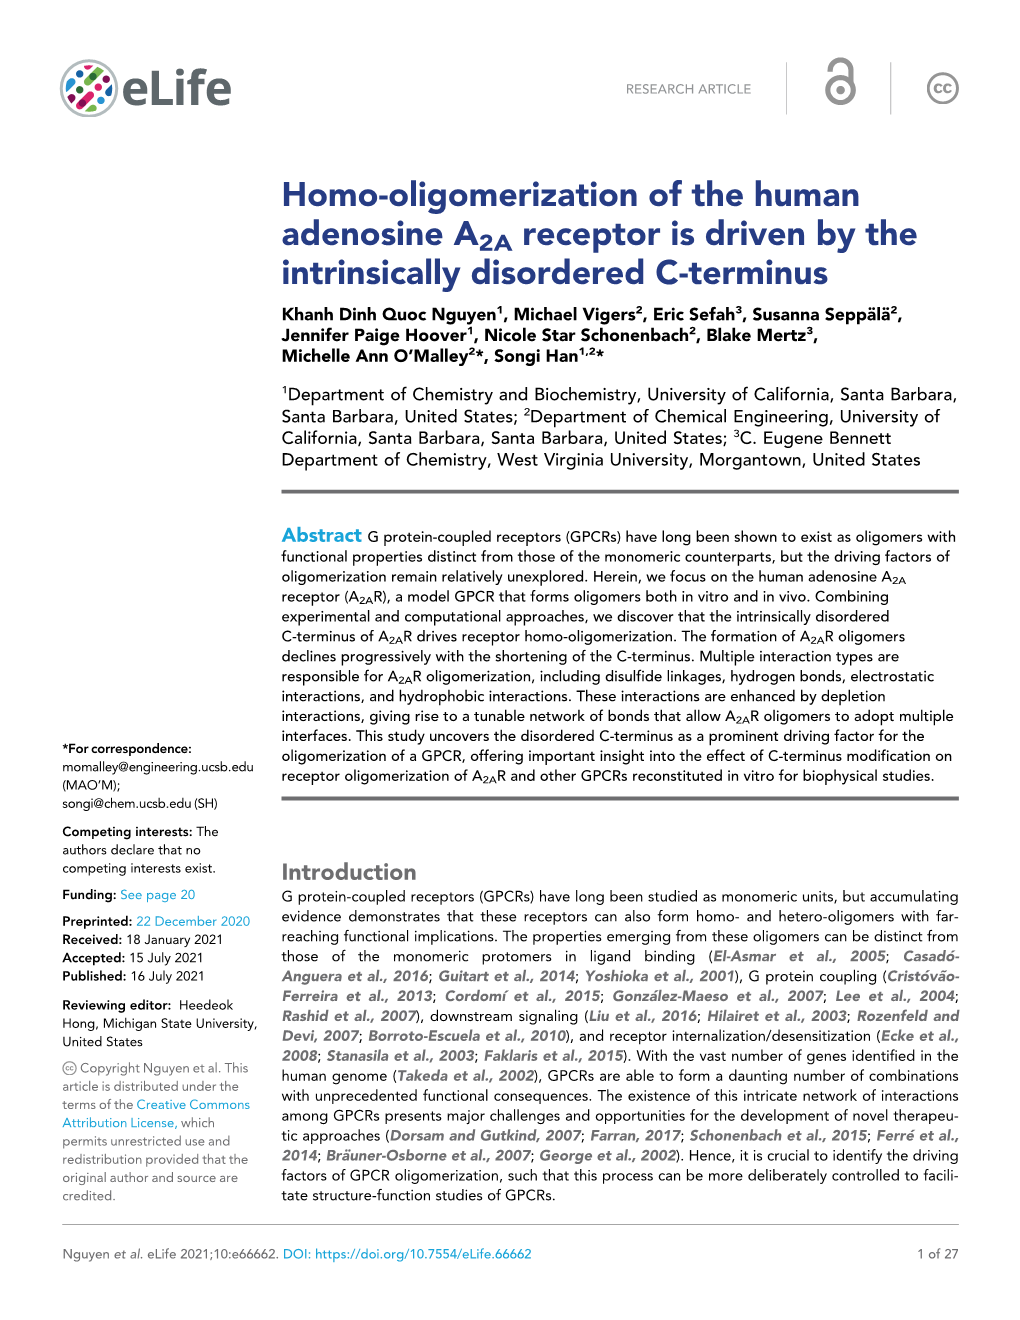 Homo-Oligomerization of the Human Adenosine A2A Receptor Is Driven